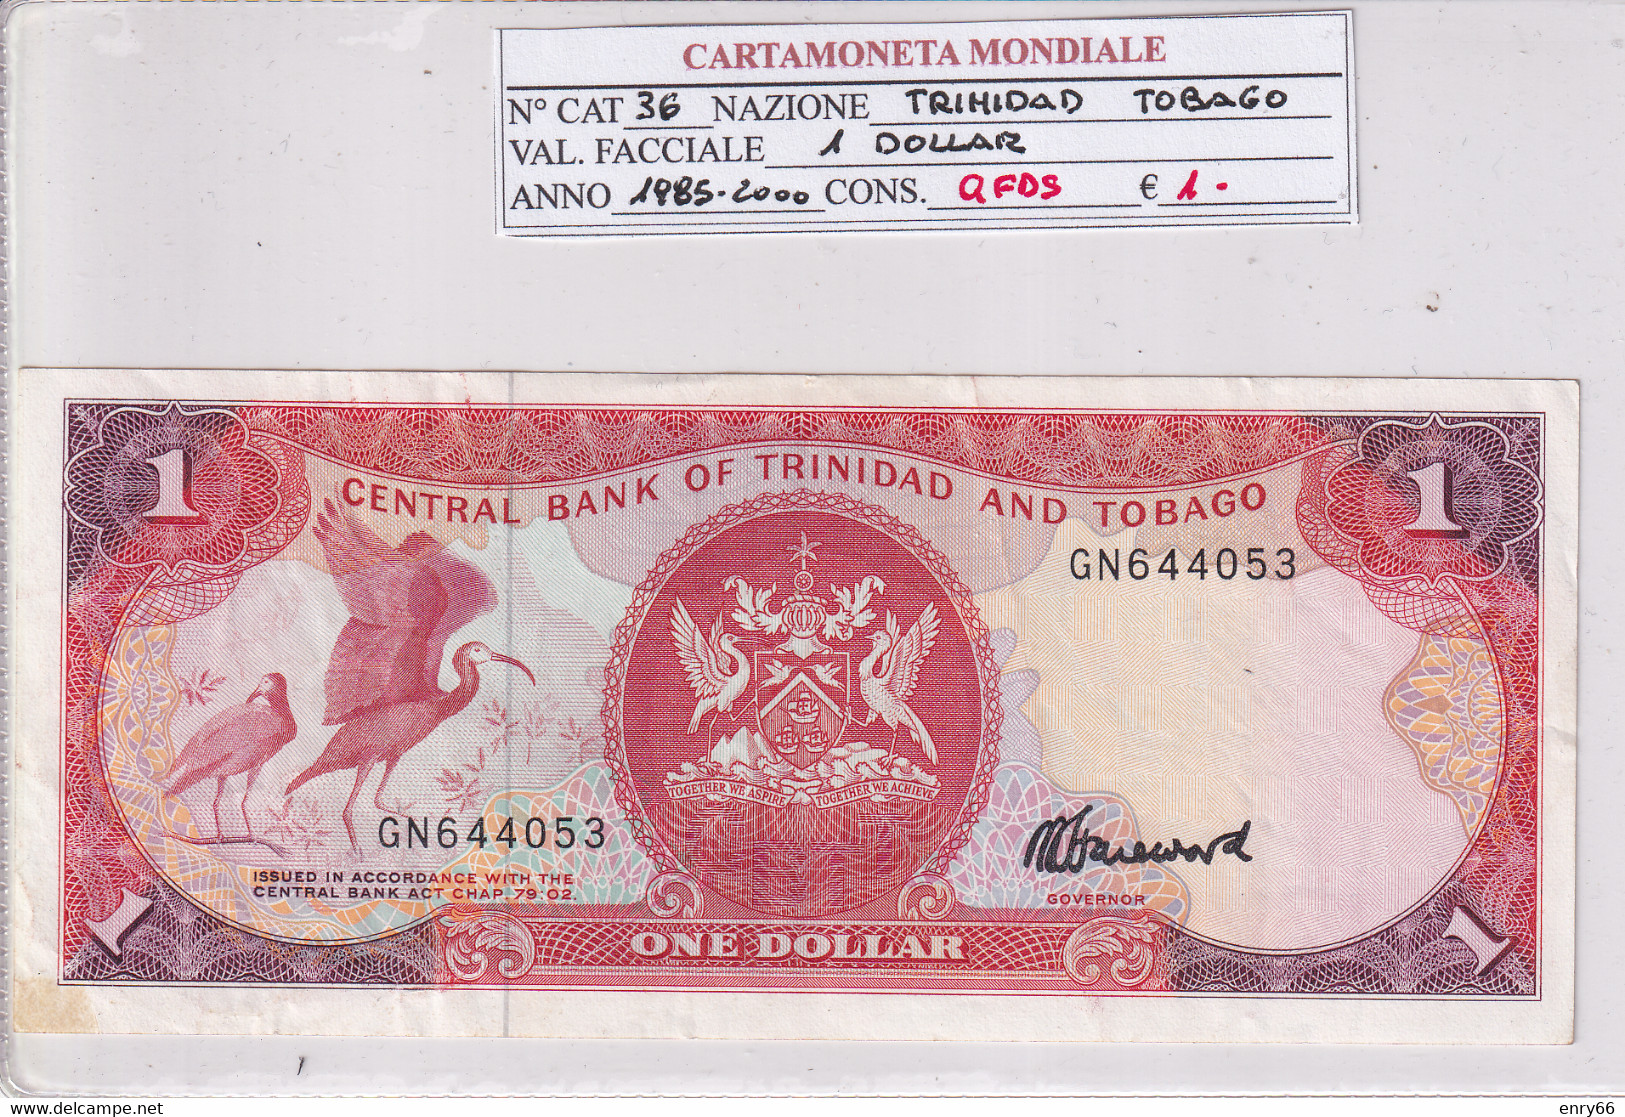 TRINIDAD E TOBAGO 1 DOLLAR 1985-2000 P36 - Trinité & Tobago